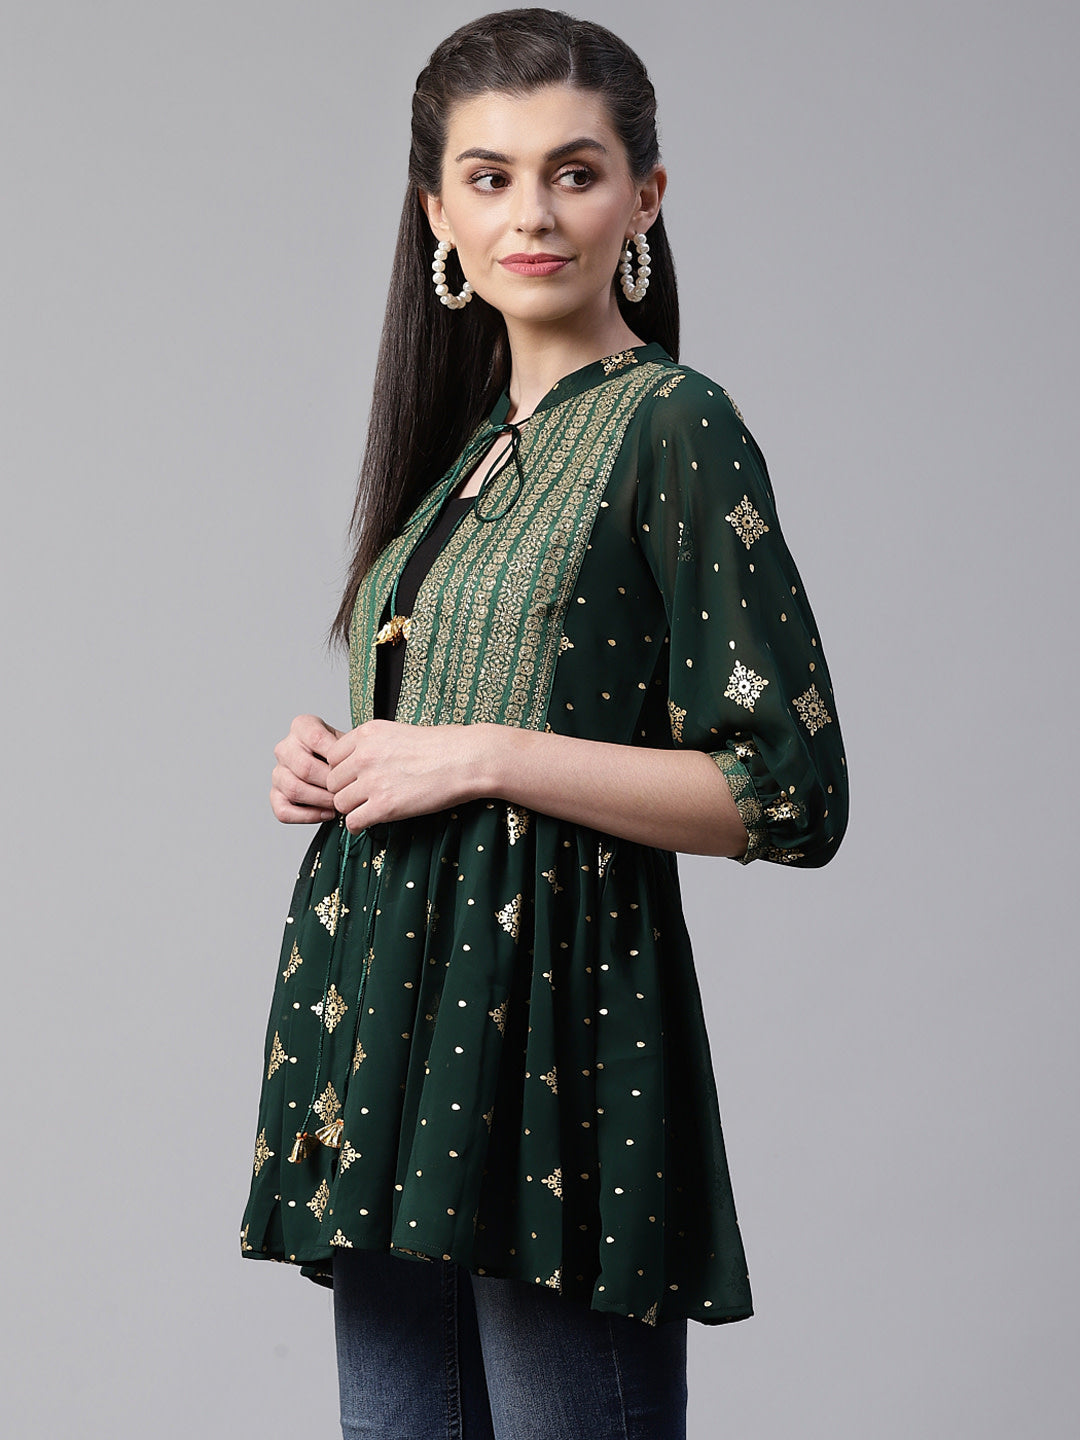 Women's Green & Golden Printed Semi-Sheer Front-Open Kediya Tunic